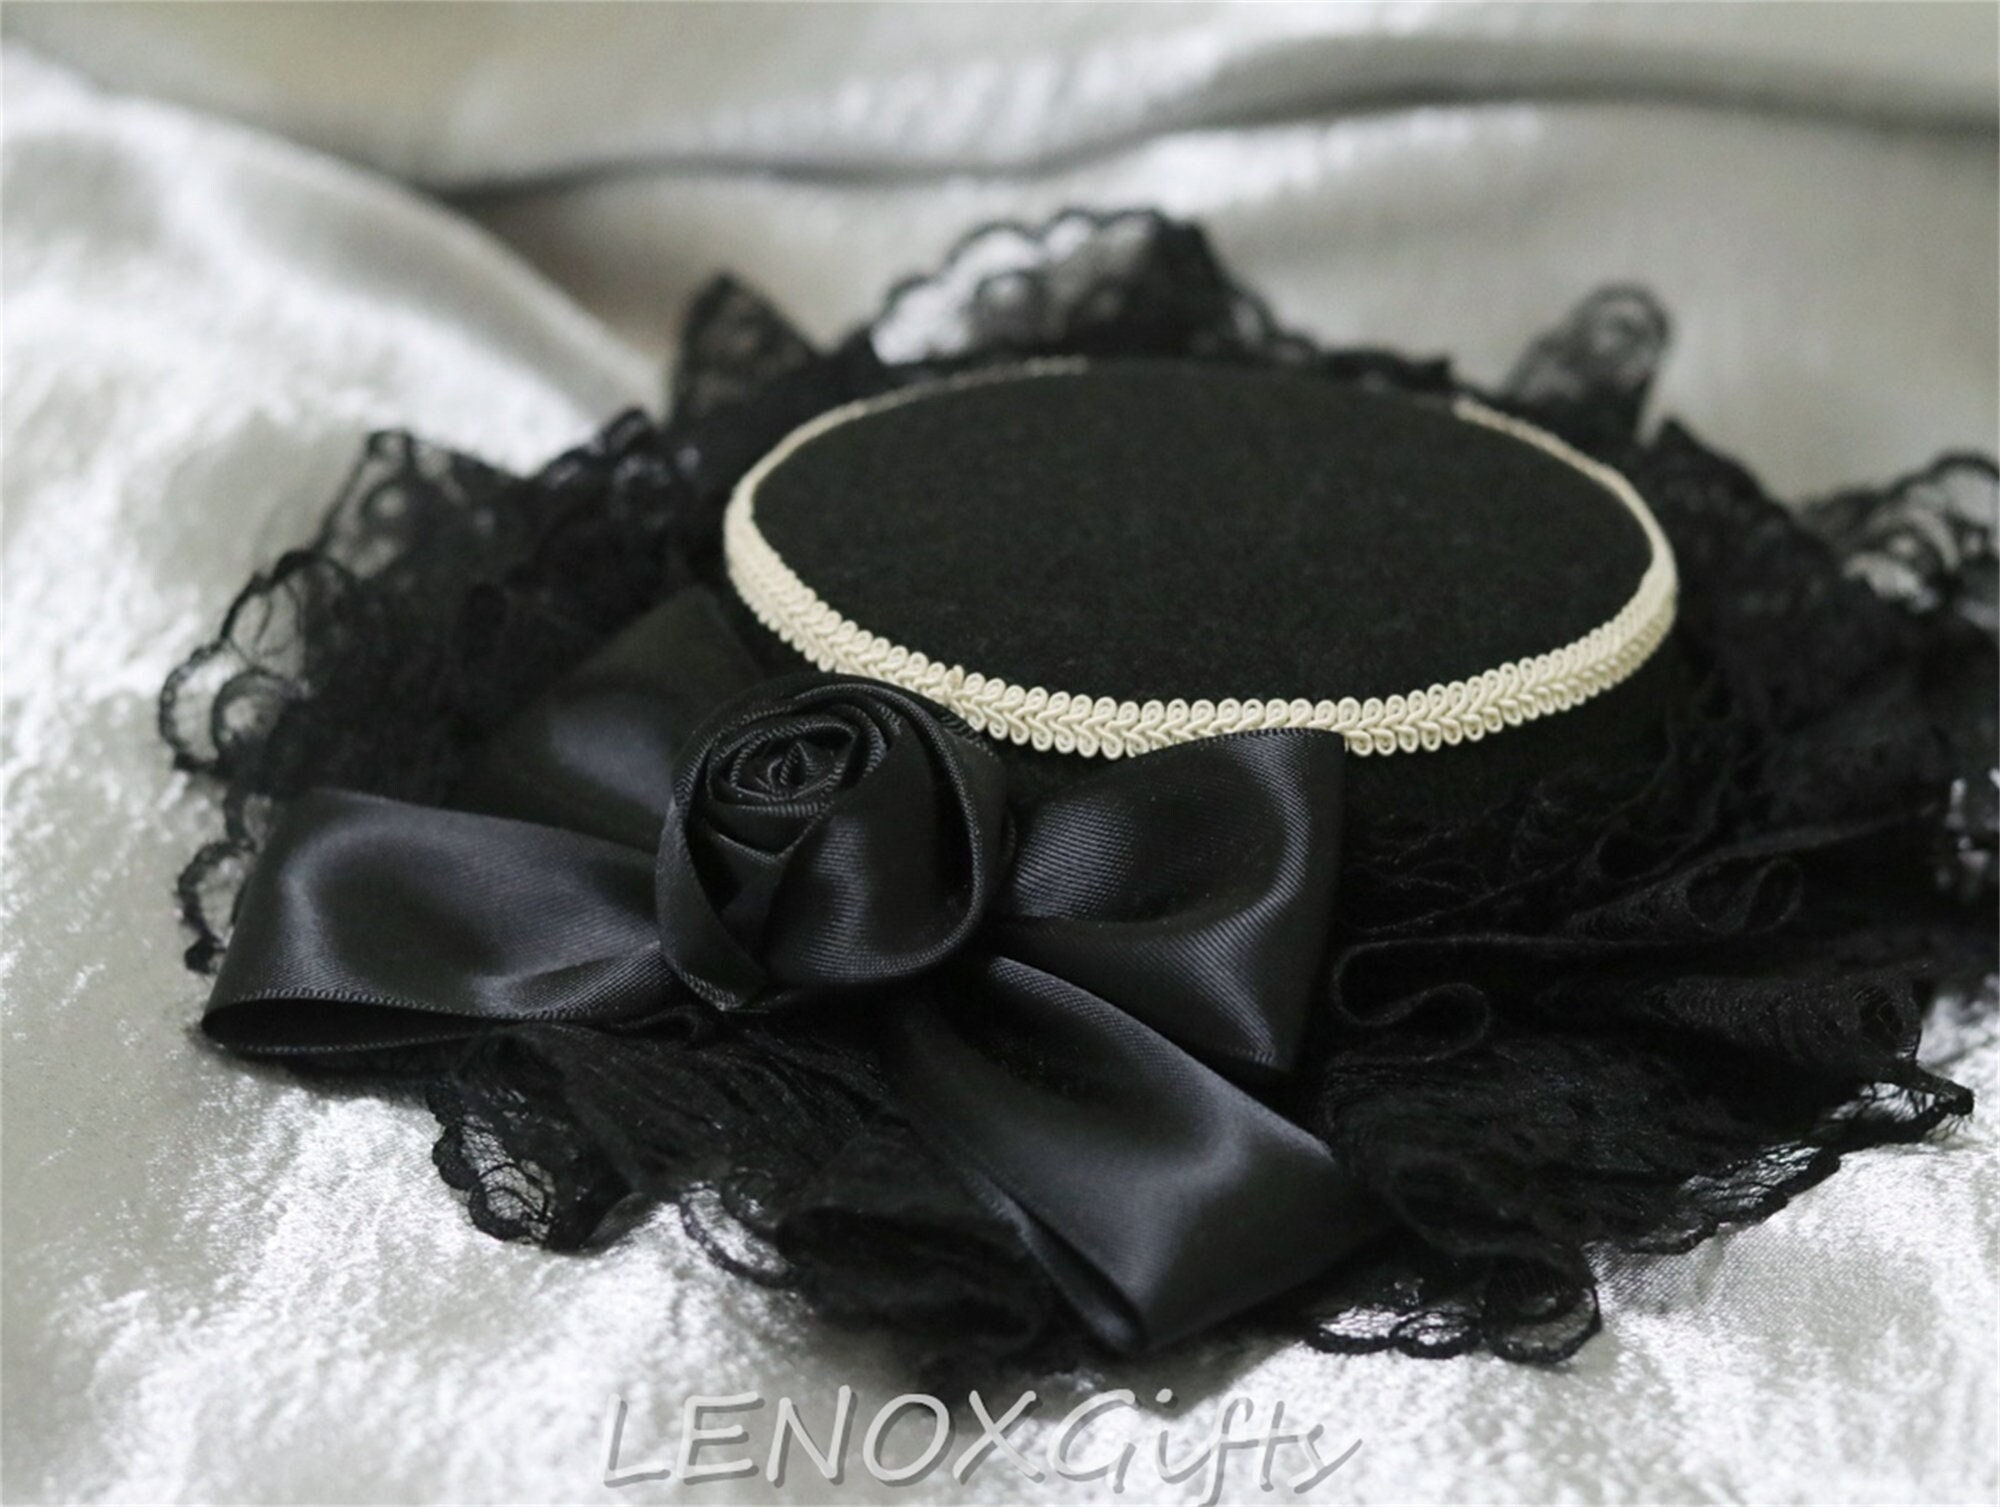  LittleLuluda Easter Party Hair Accessory Headband Gothic Lolita  Cosplay Cute Rabbit Bunny Ears Bow Lace Hair Band Headwear (Black)